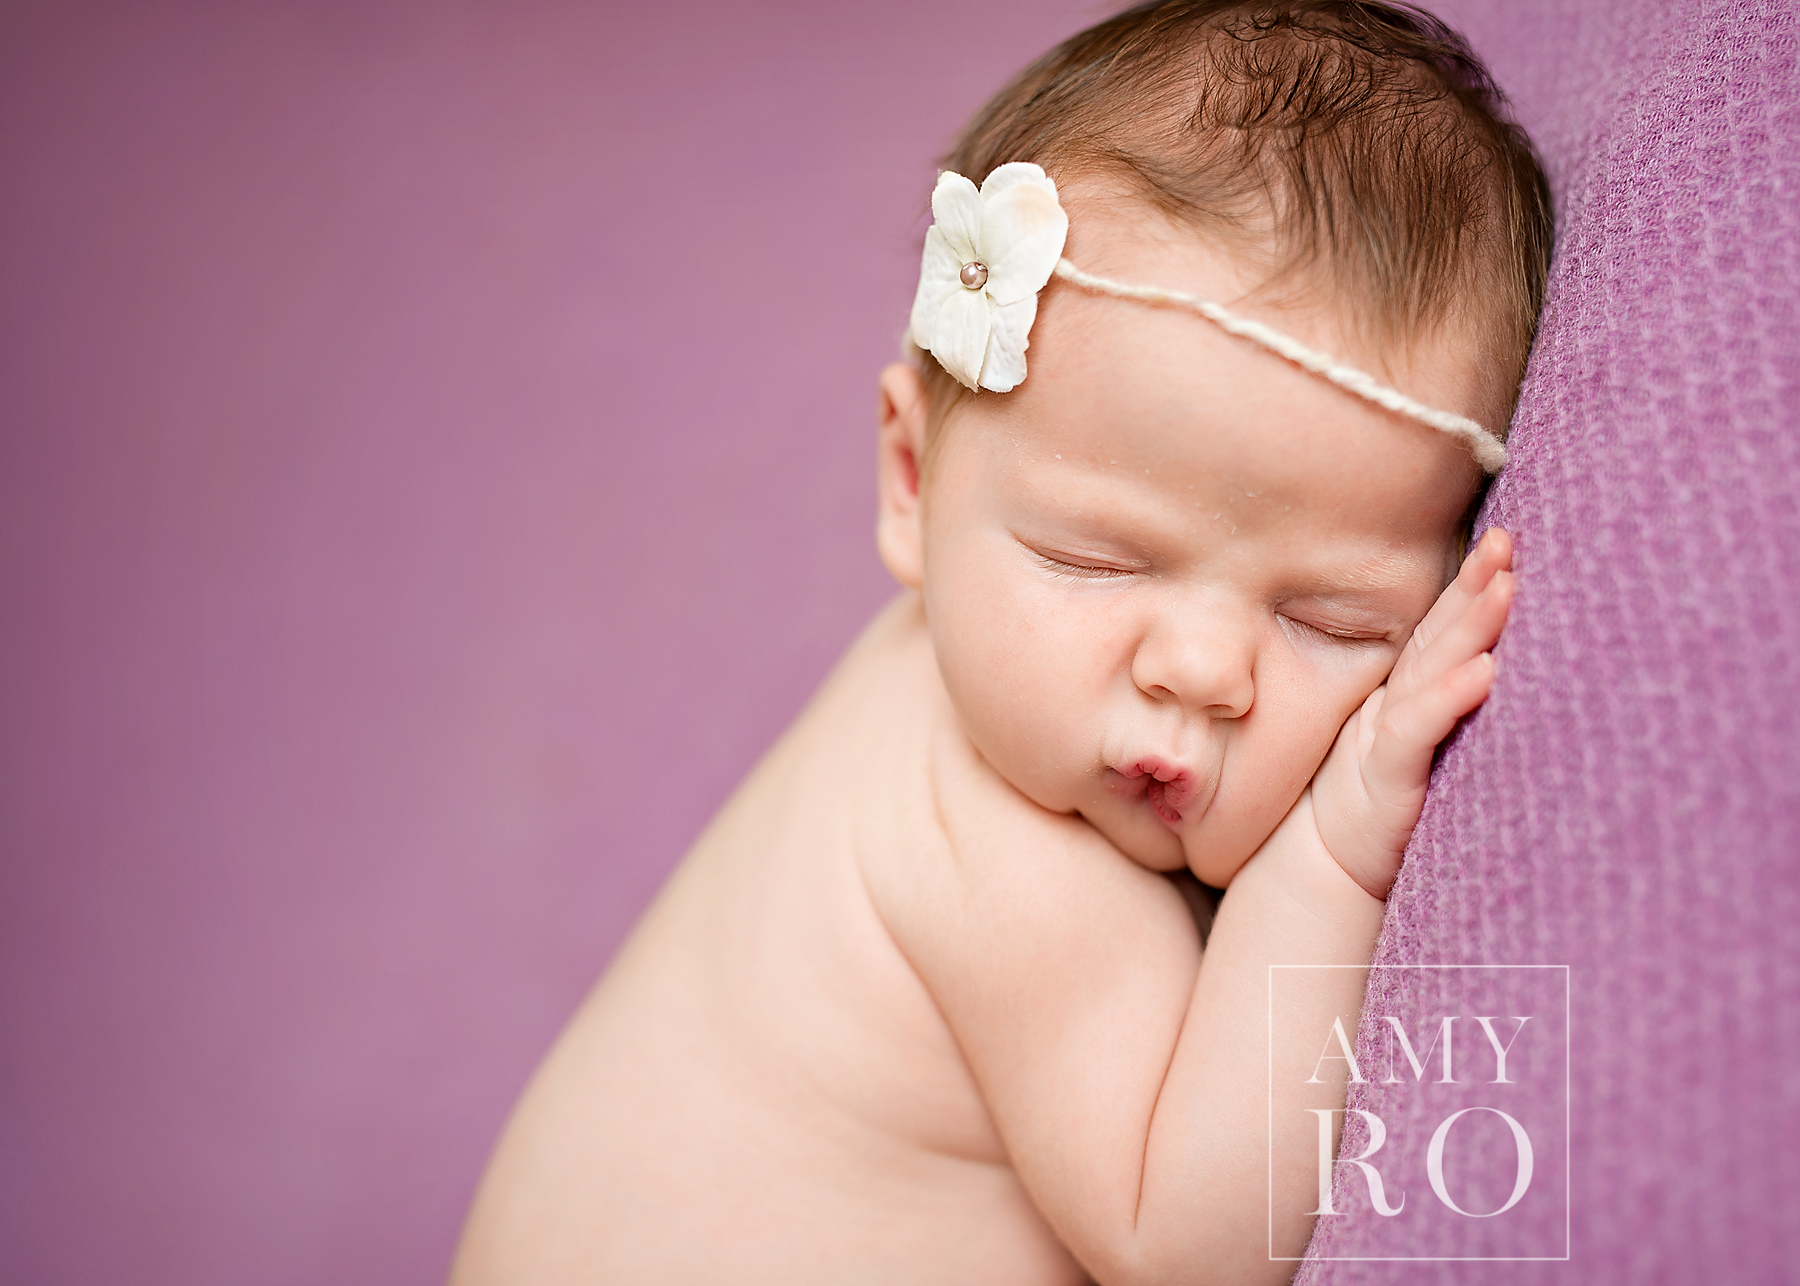 Sleeping image of newborn girl with flower headband on a purple blanket taken during newborn session photography in Massachusetts